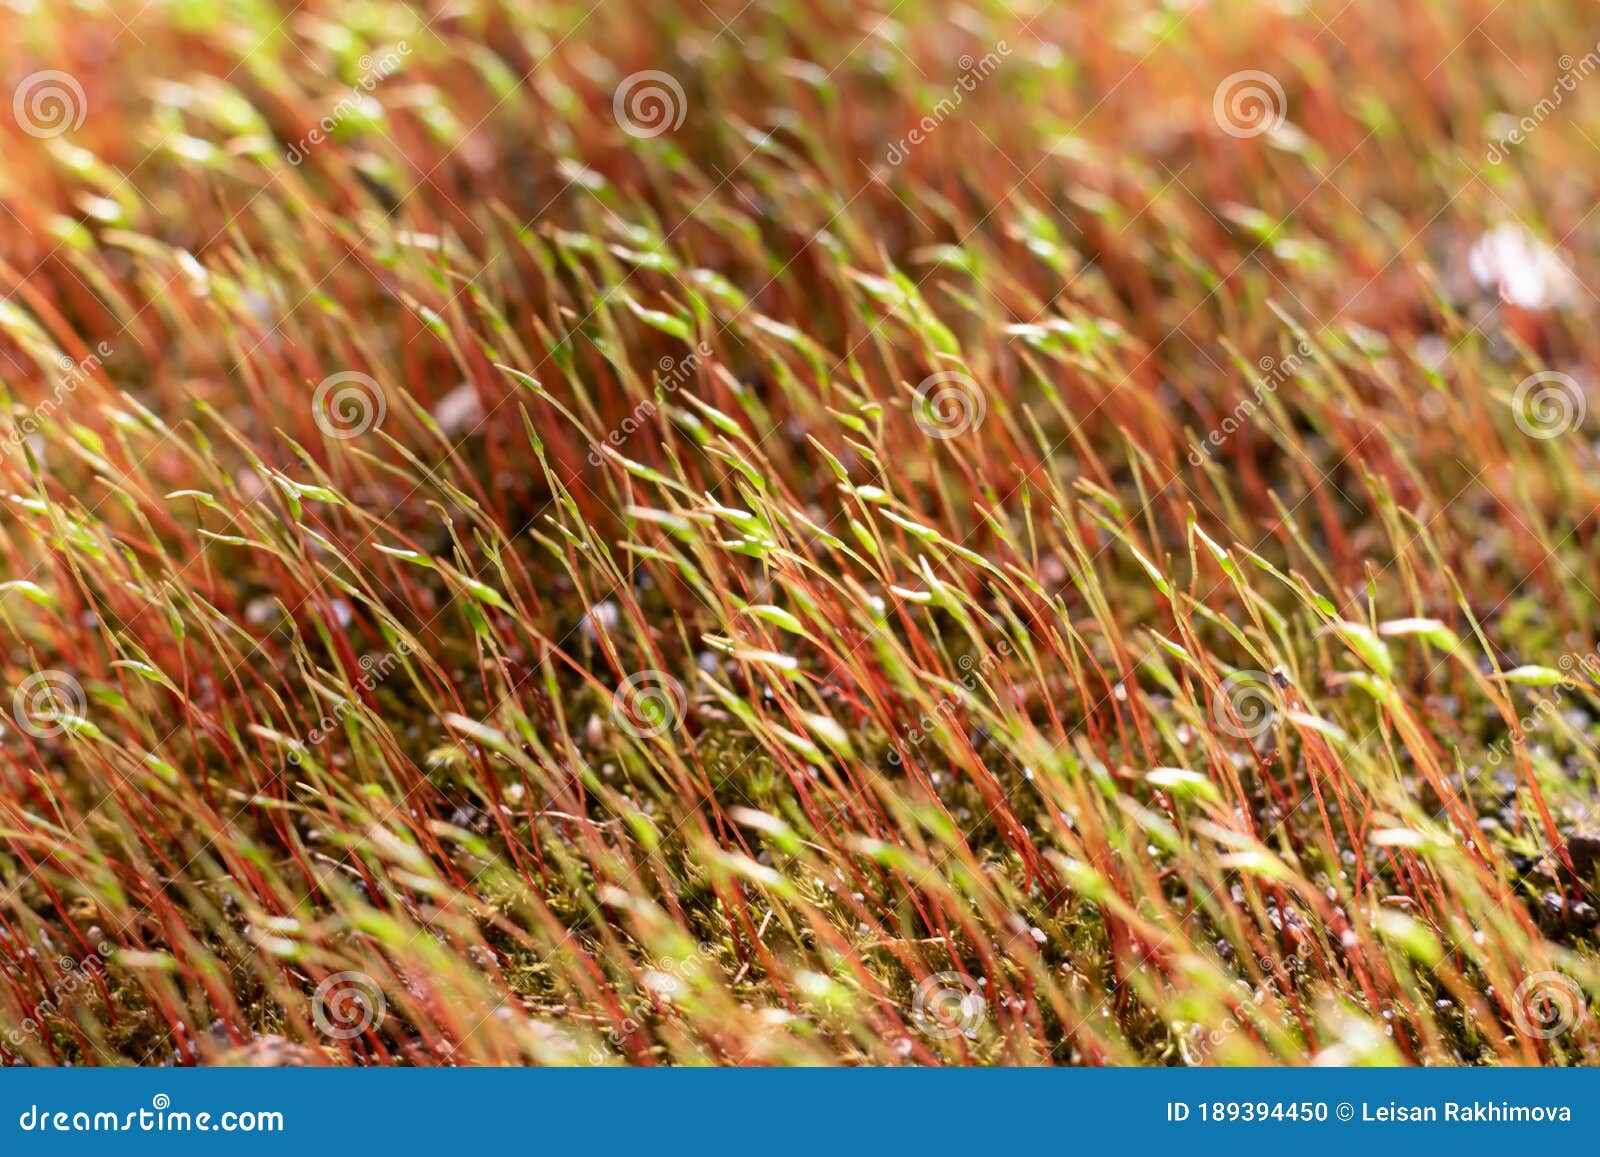 https://www.dreamstime.com/macro-bryum-moss-pohlia-nutans-green-spore-capsules-growing-ground-tiny-plants-macro-bryum-moss-pohlia-nutans-image189394450